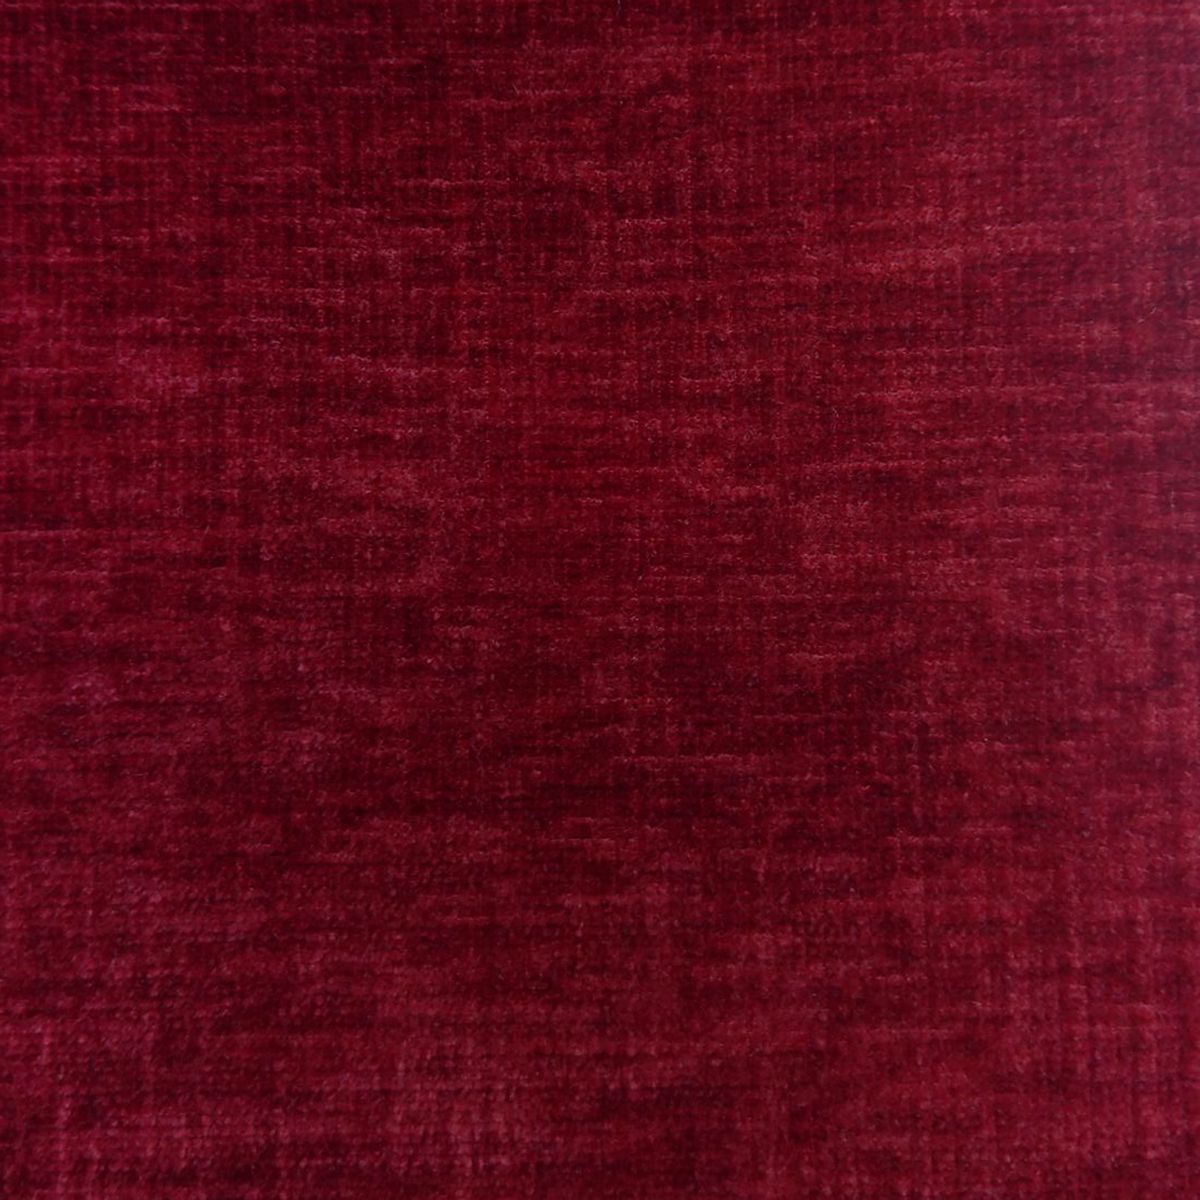 Isernia Scarlet Velvet Fabric by Voyage Maison